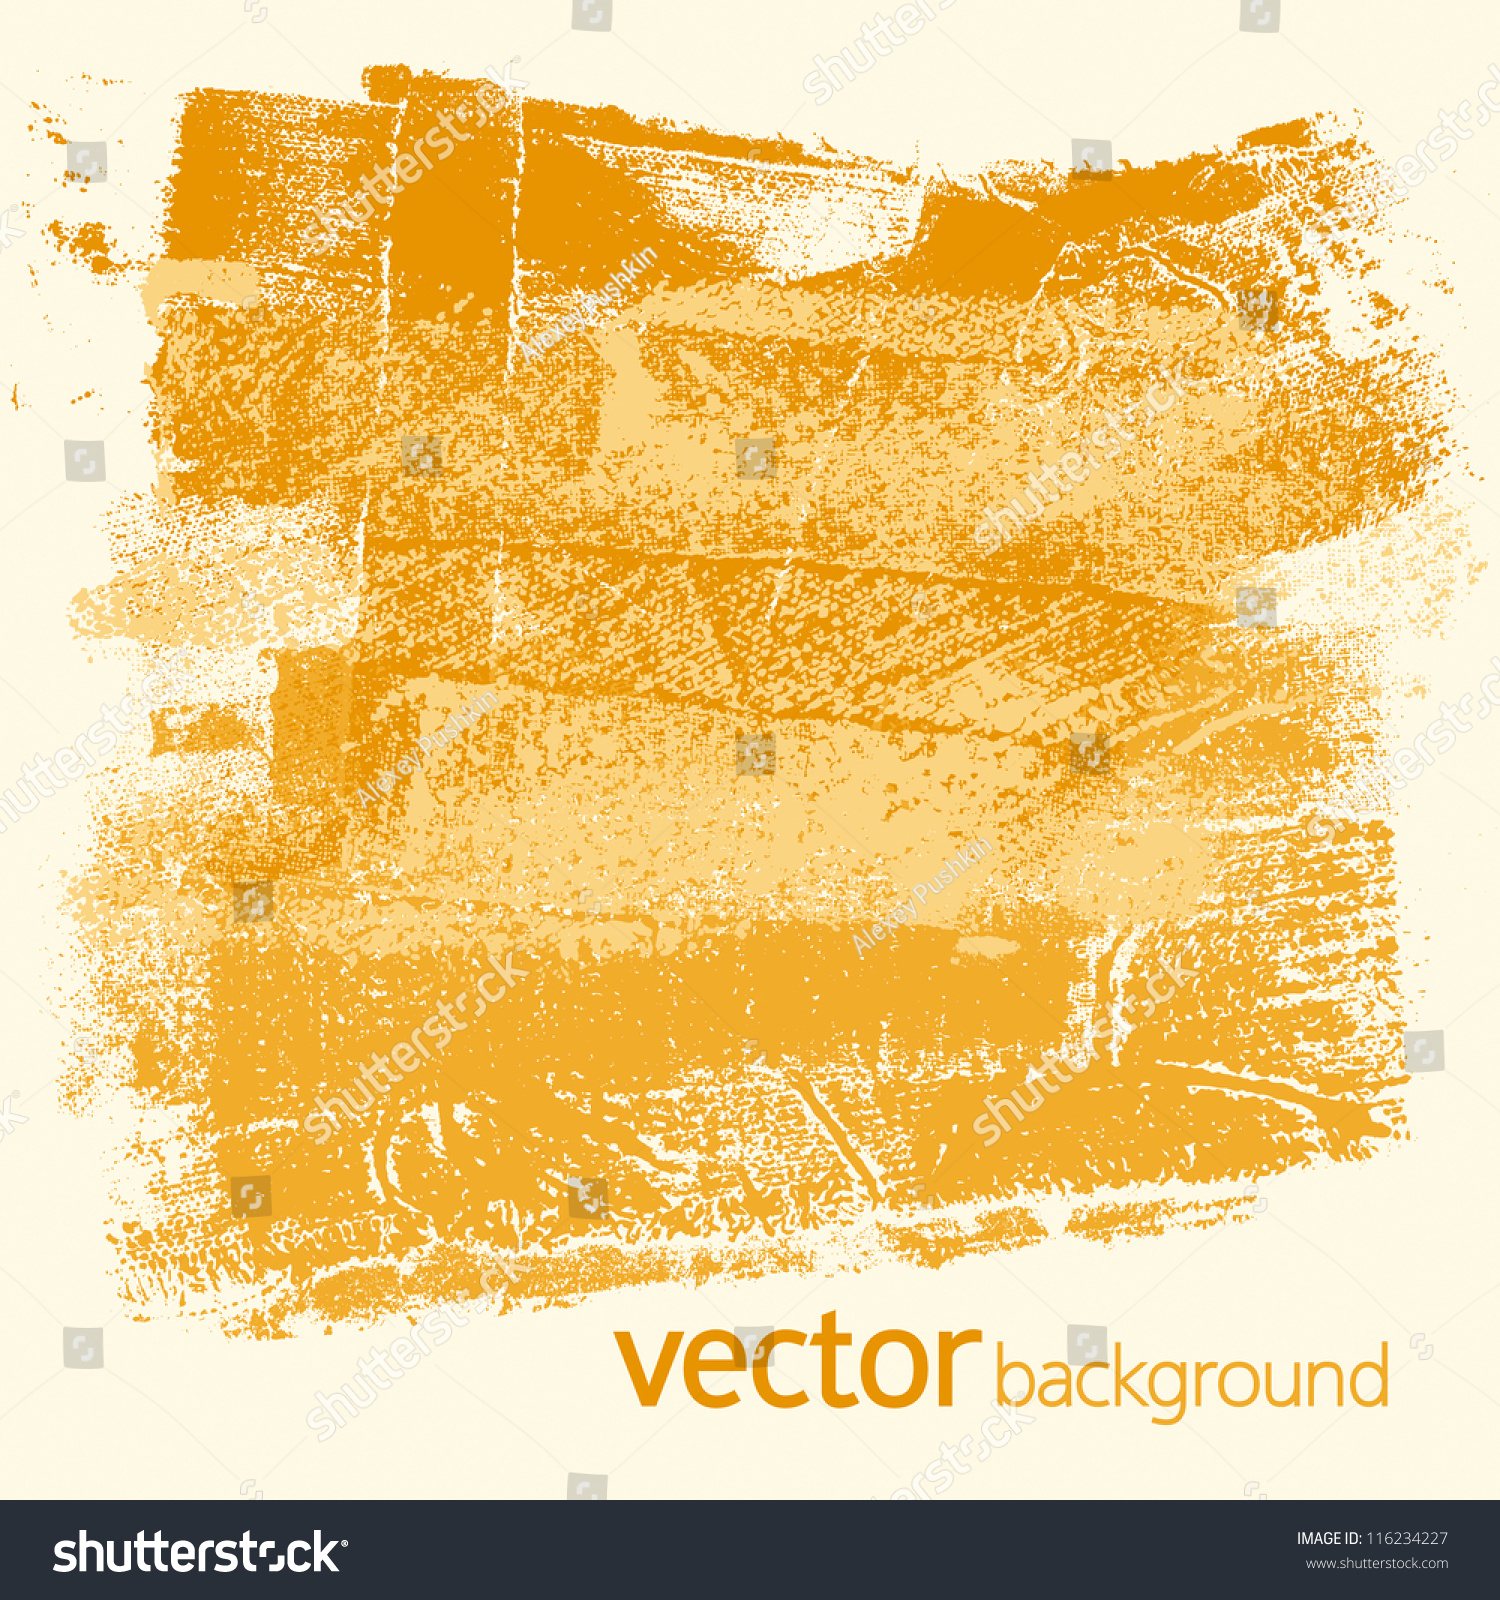 Grunge Textures, Set 10 Stock Vector Illustration 116234227 : Shutterstock